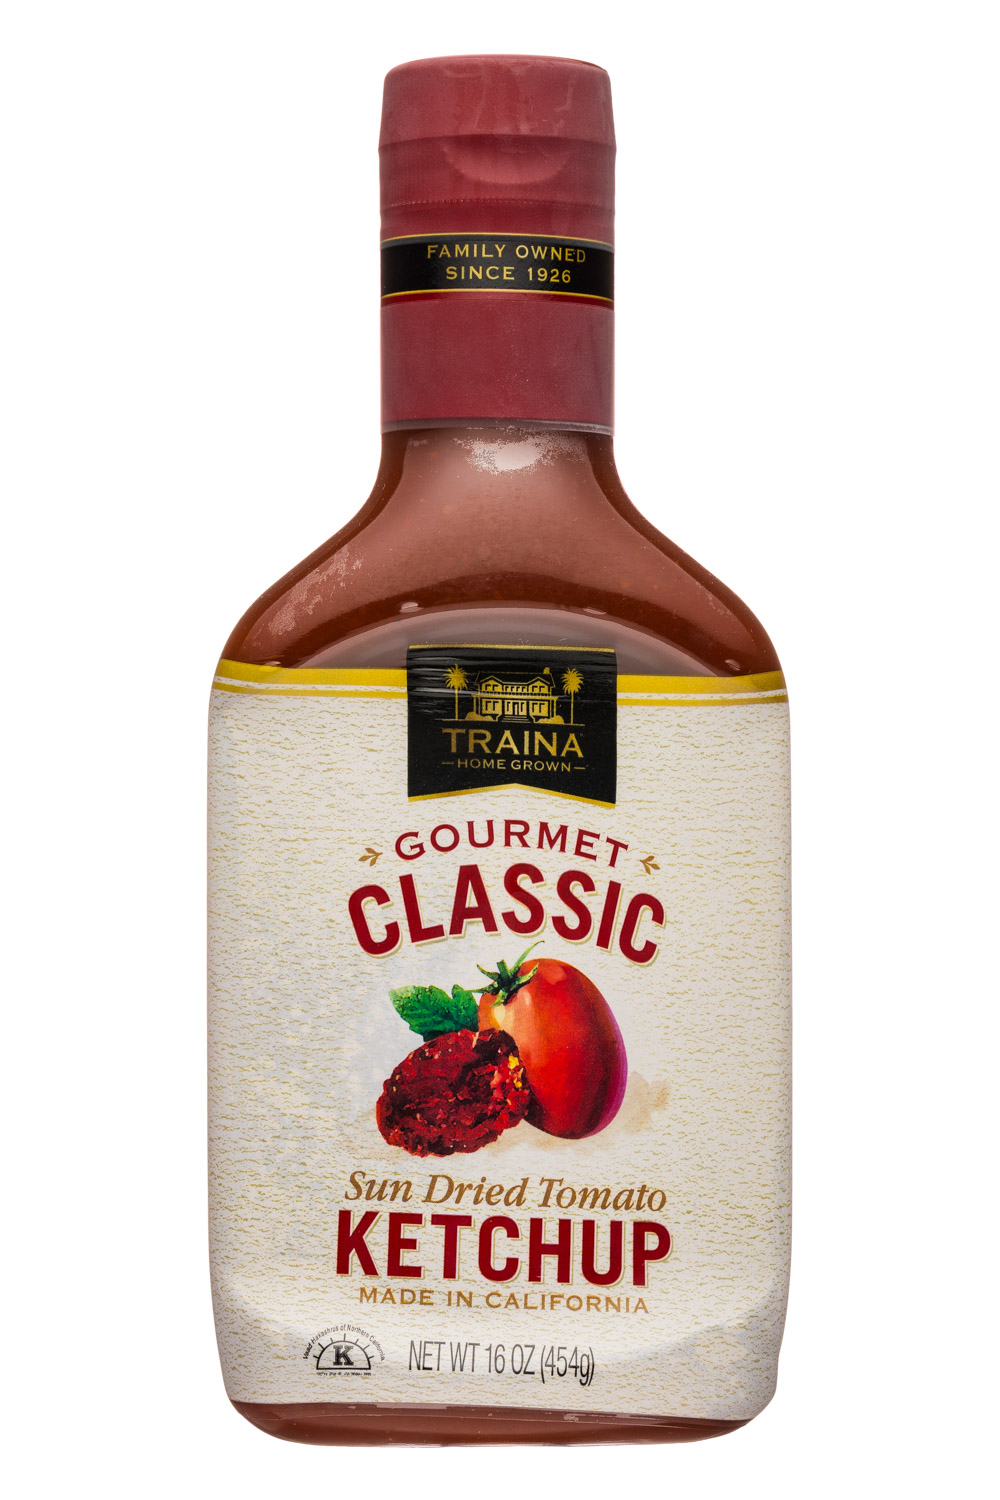 Gourmet Classic Ketchup